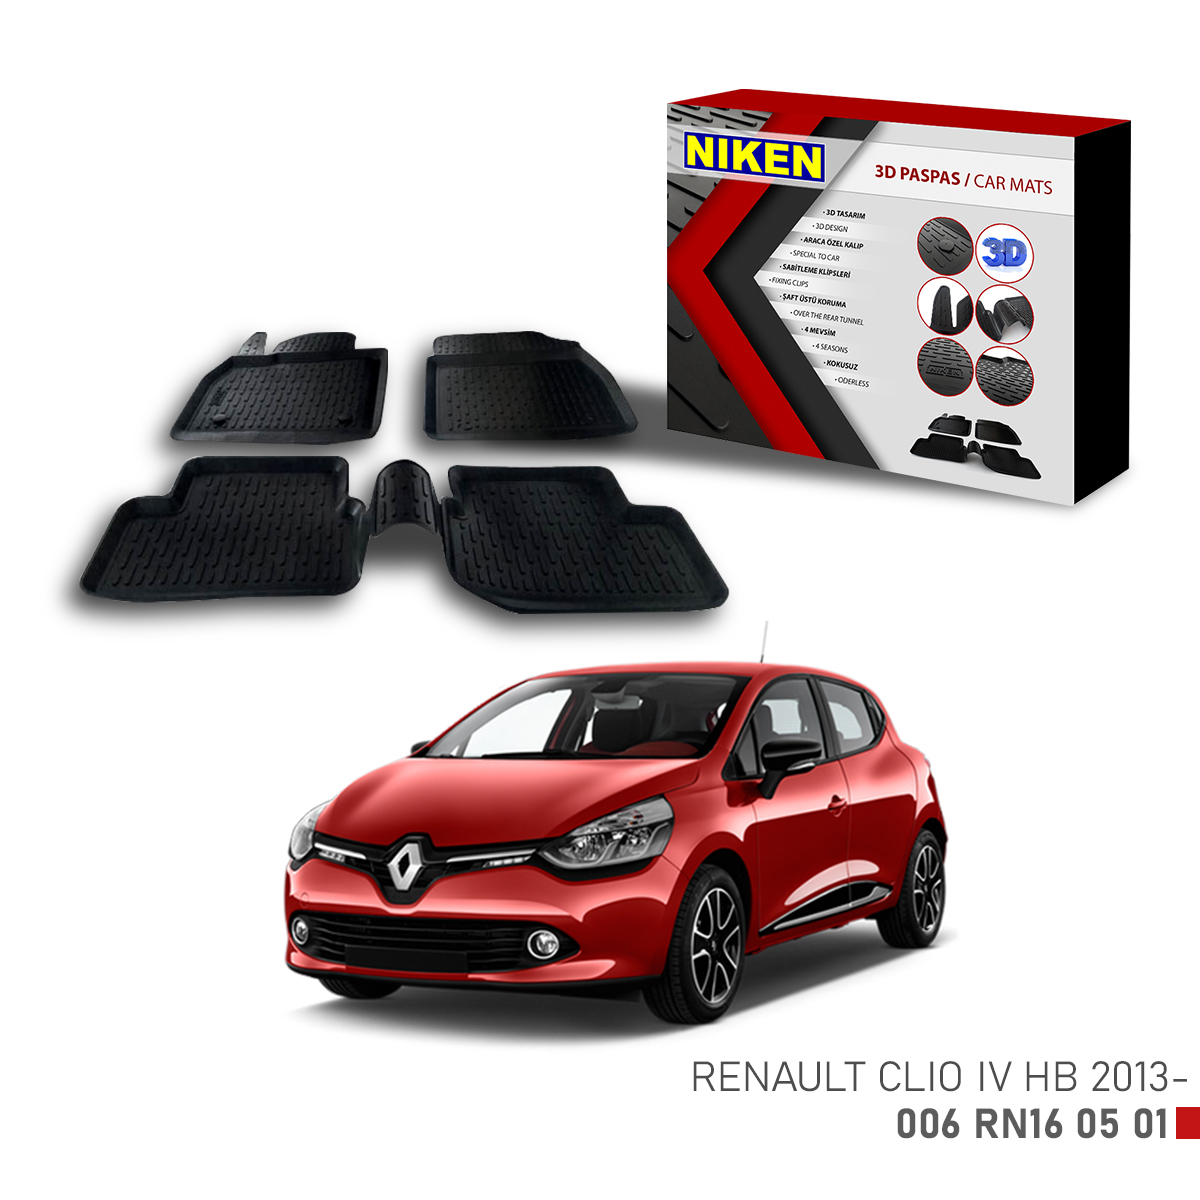 RENAULT CLIO 4 HB 2013-3D CAR MATS